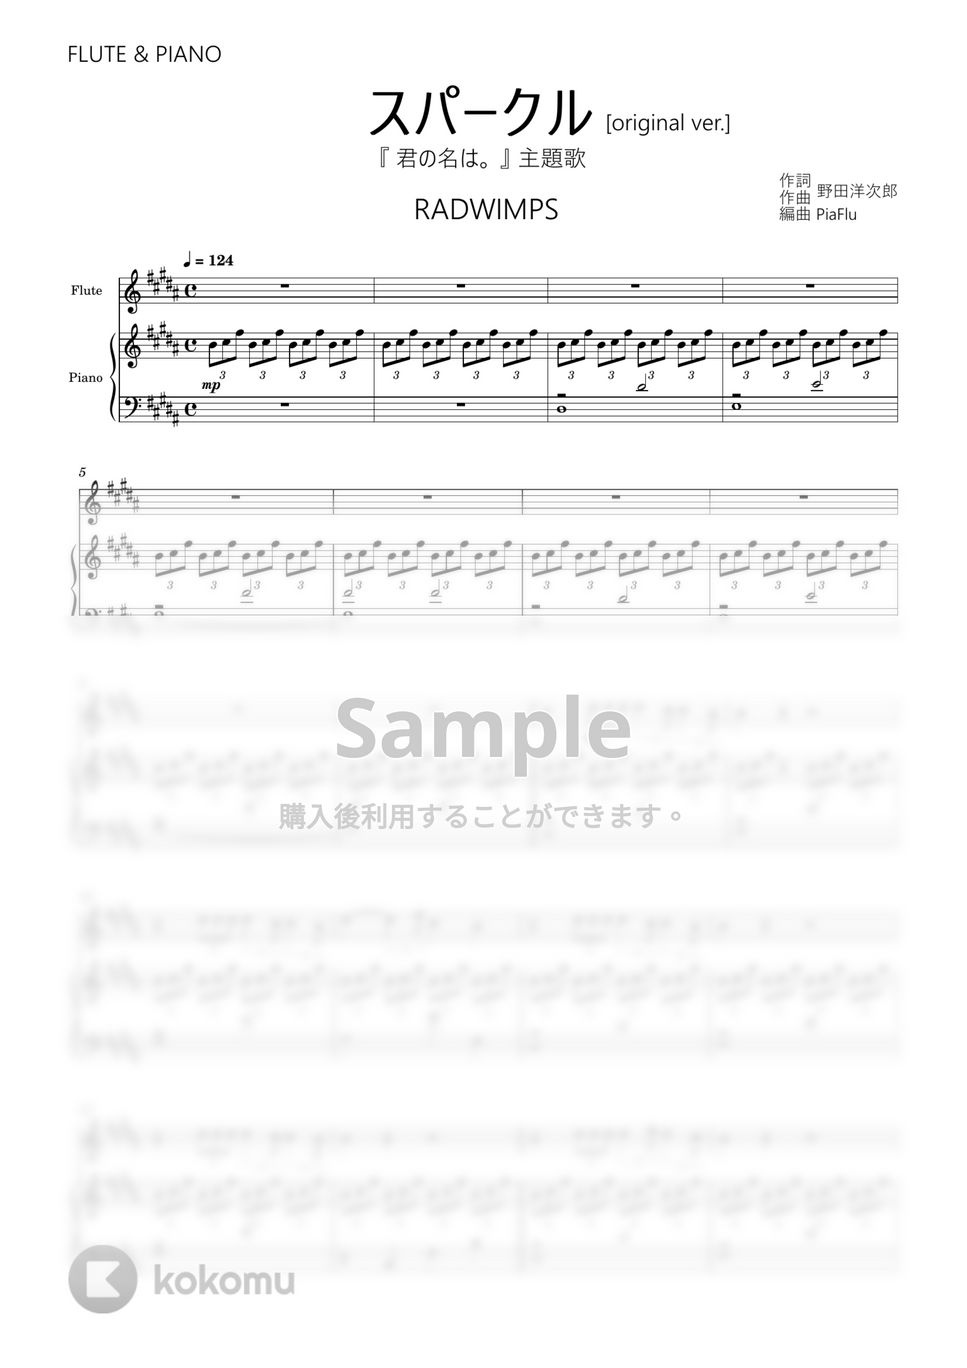 RADWIMPS - スパークル [original ver.] (フルート&ピアノ伴奏) by PiaFlu